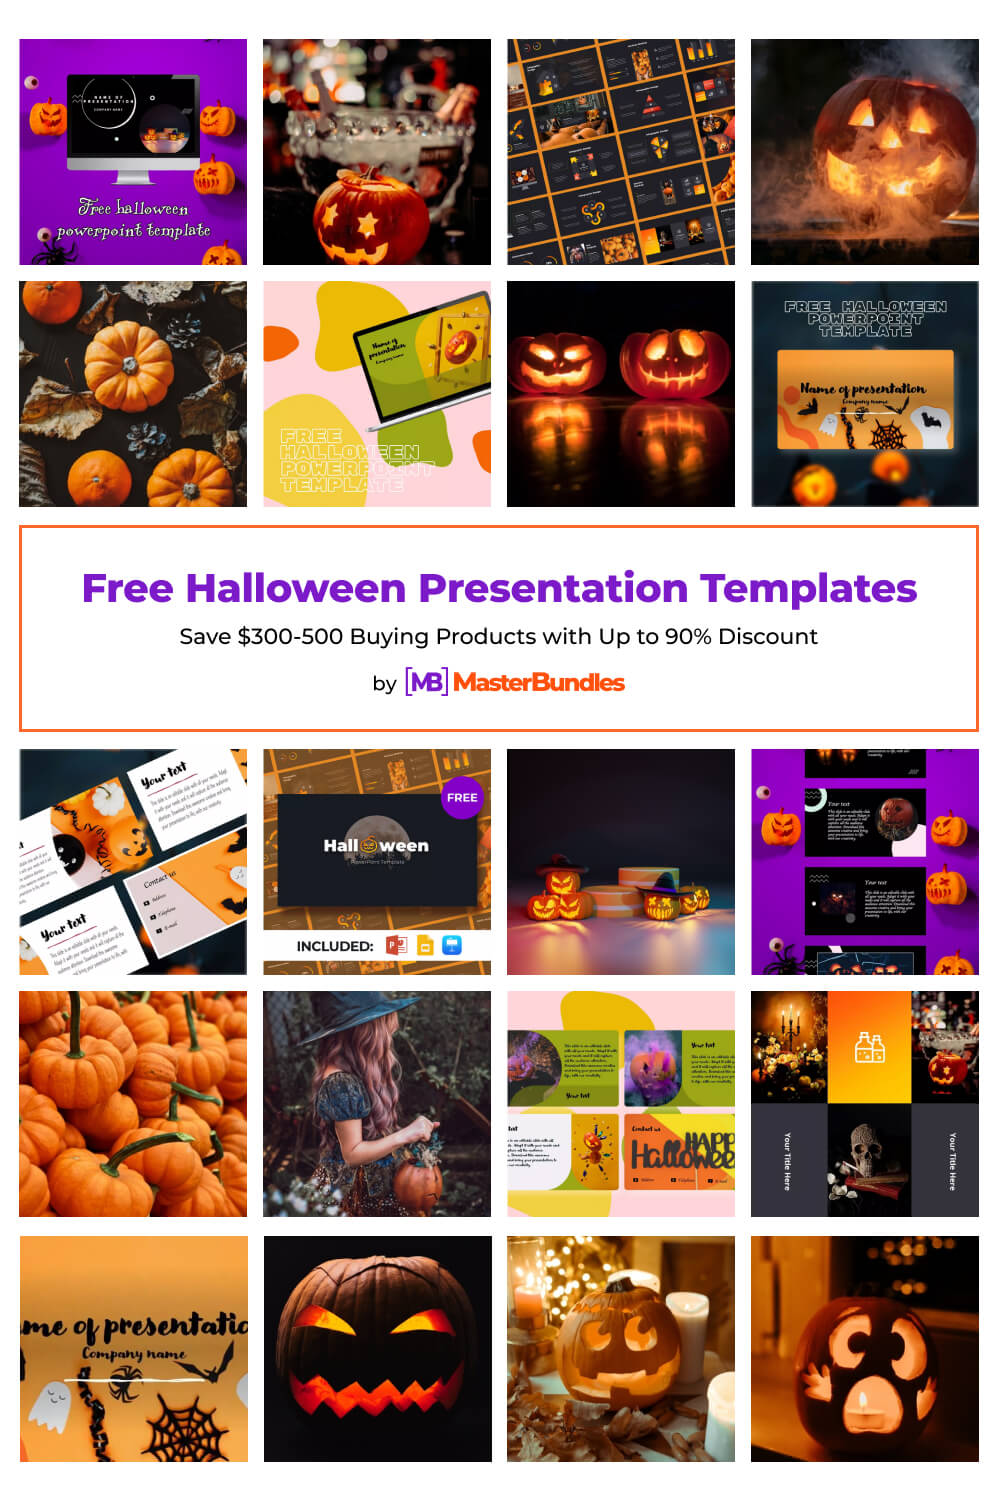 free halloween presentation templates pinterest image.